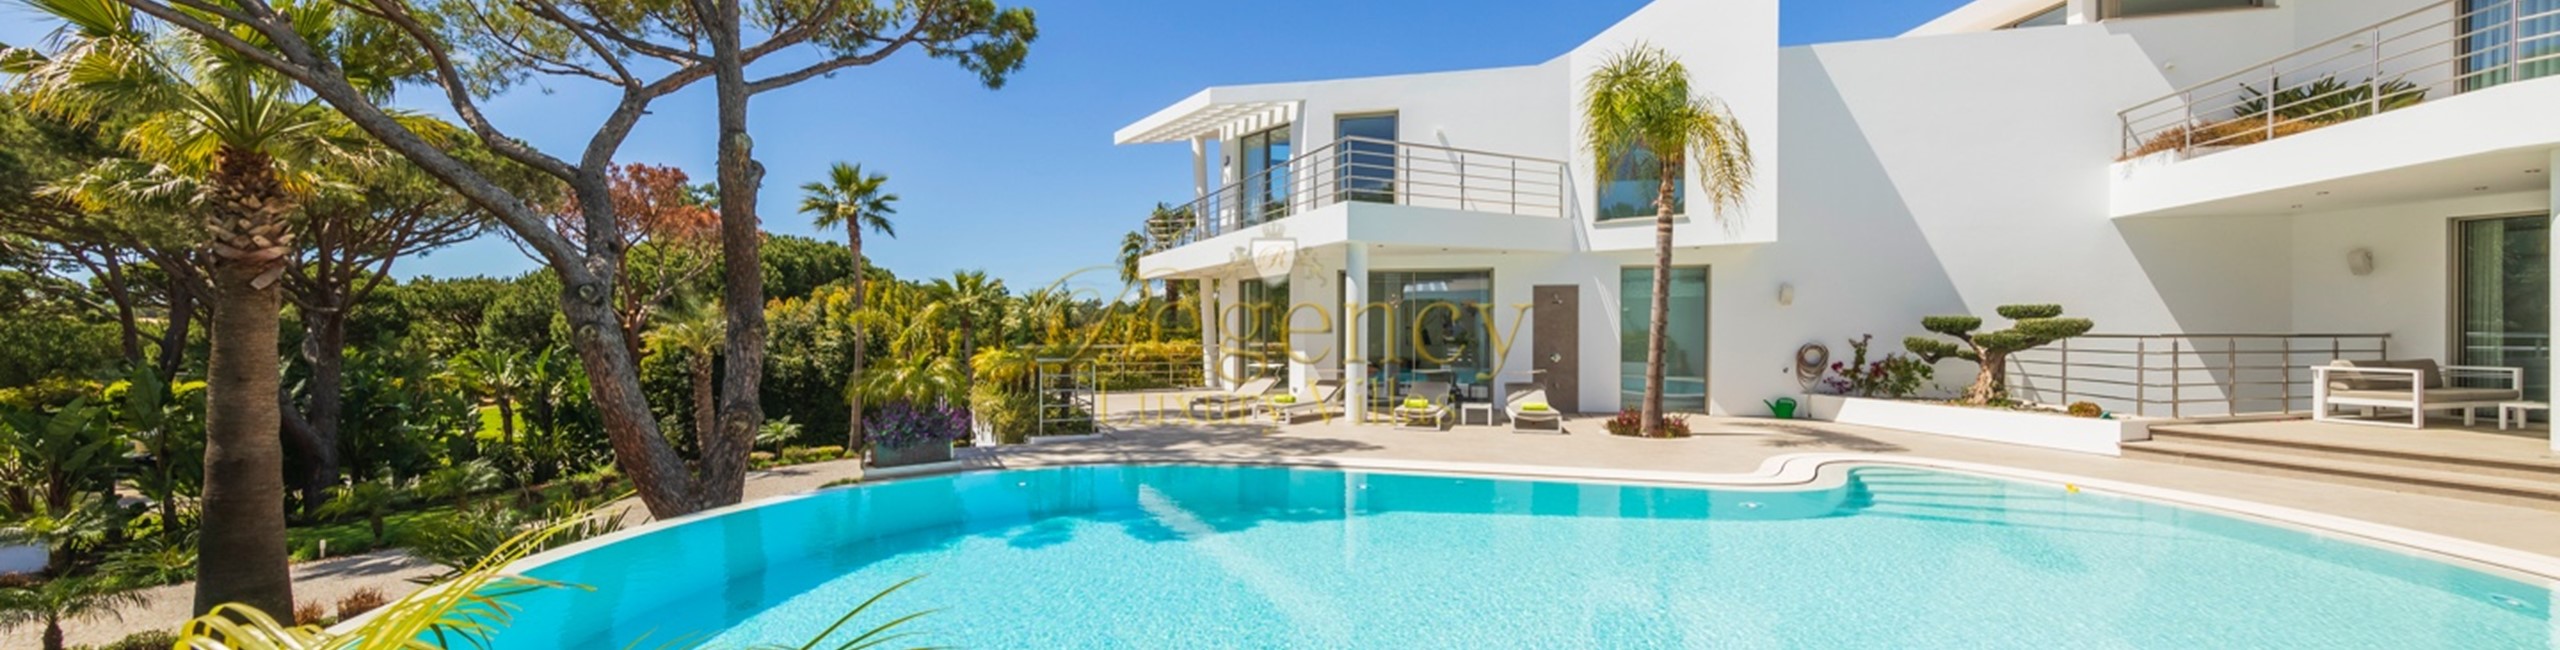 Villa In The Algarve To Rent 7 Bedroom Quinta Do Lago